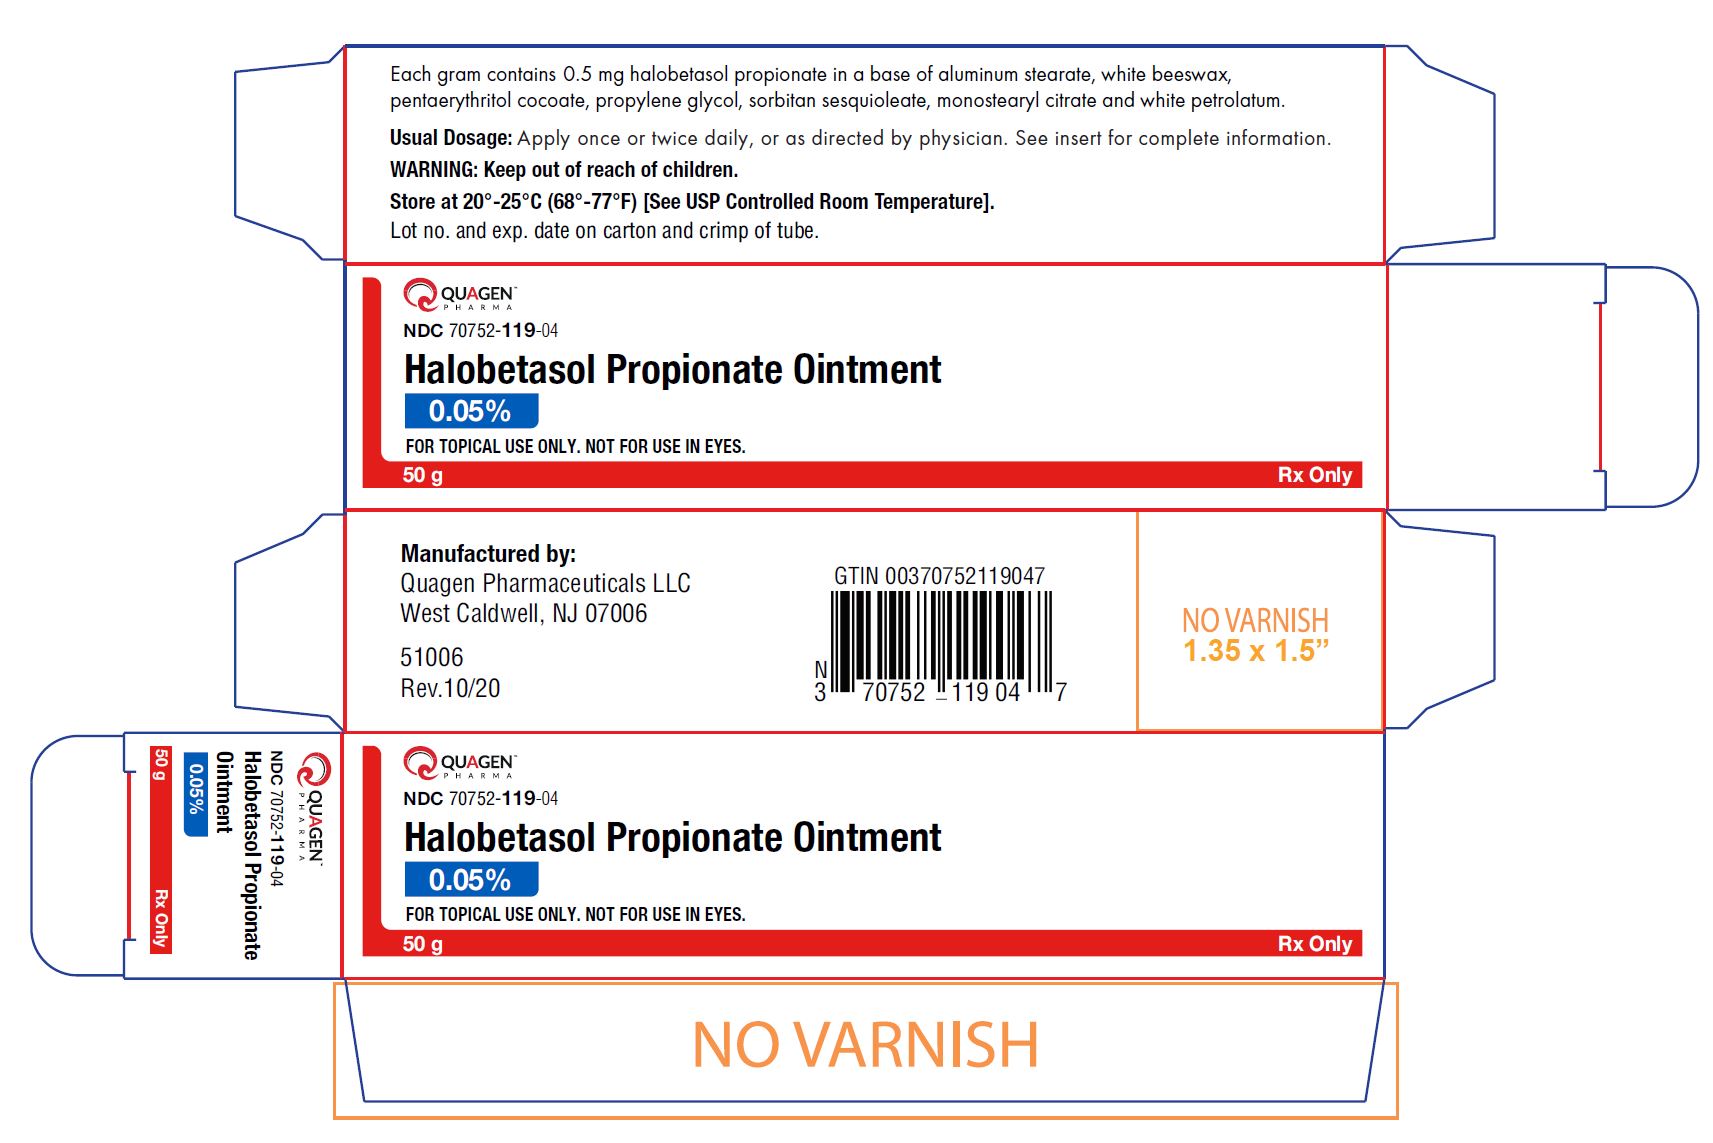 Halobetasol Propionate Ointment, 0.05% - 50g Carton Label